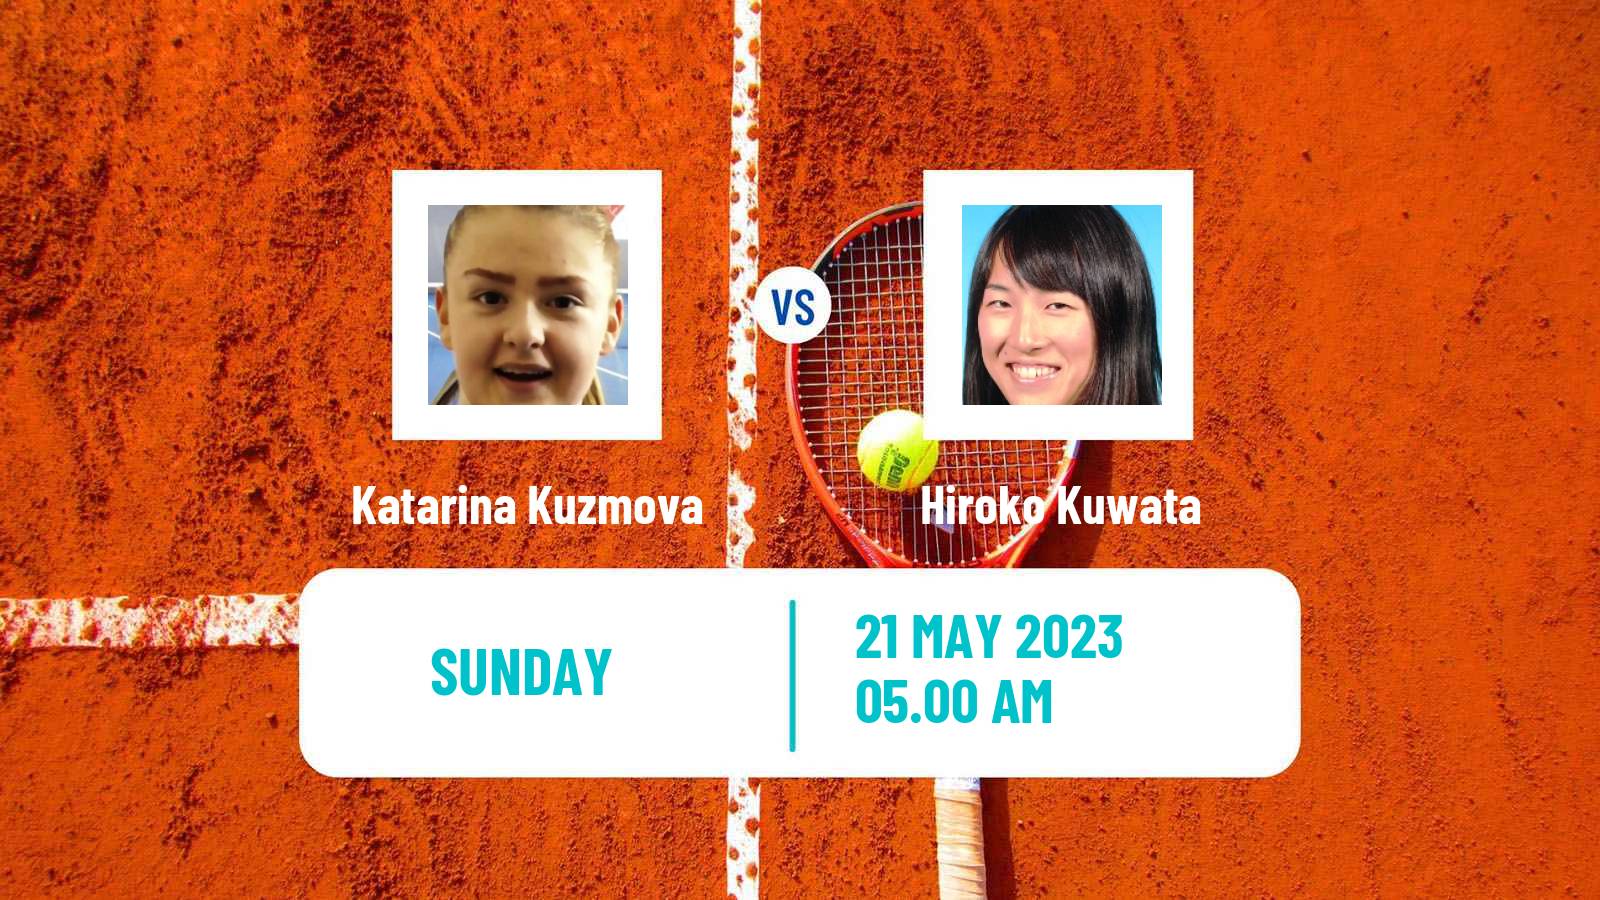 Tennis ITF W15 Monastir 16 Women Katarina Kuzmova - Hiroko Kuwata